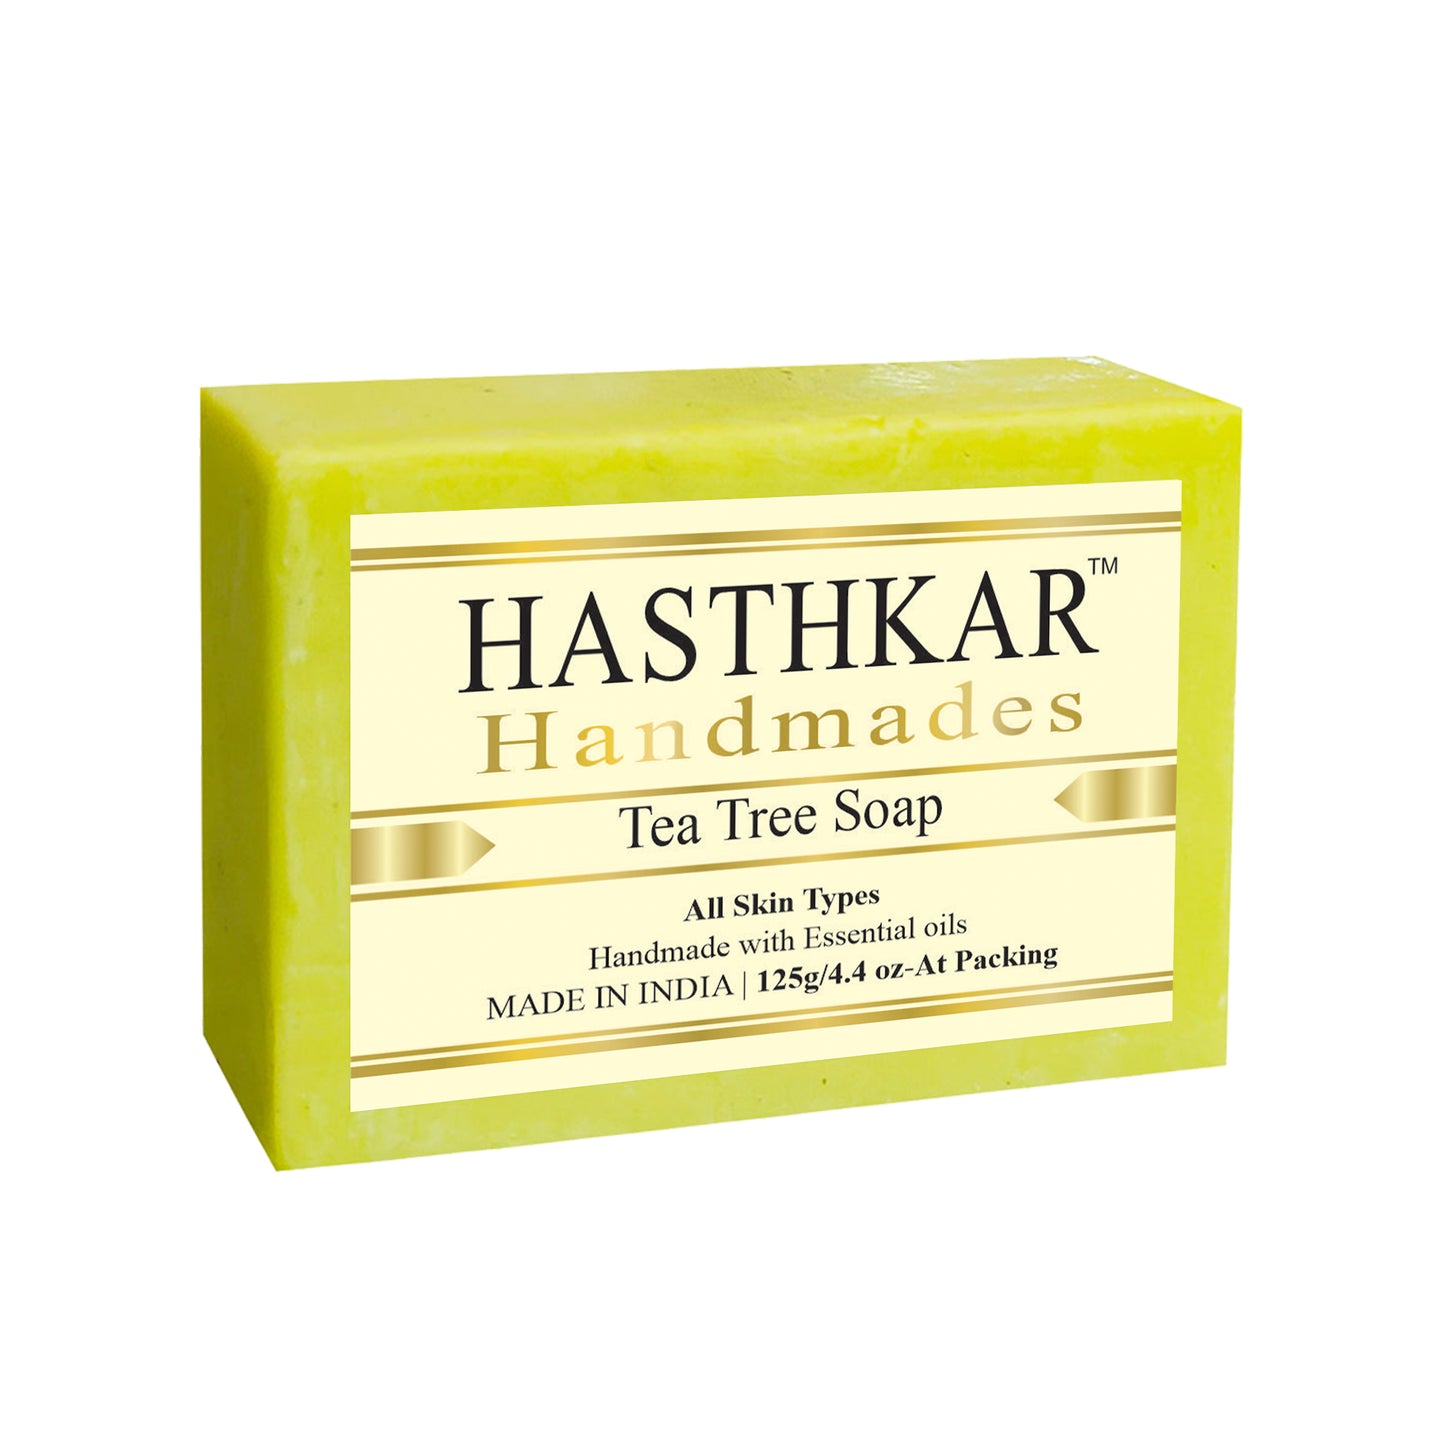 Hasthkar Handmades Glycerine Tea tree Soap 125gm Pack of 6